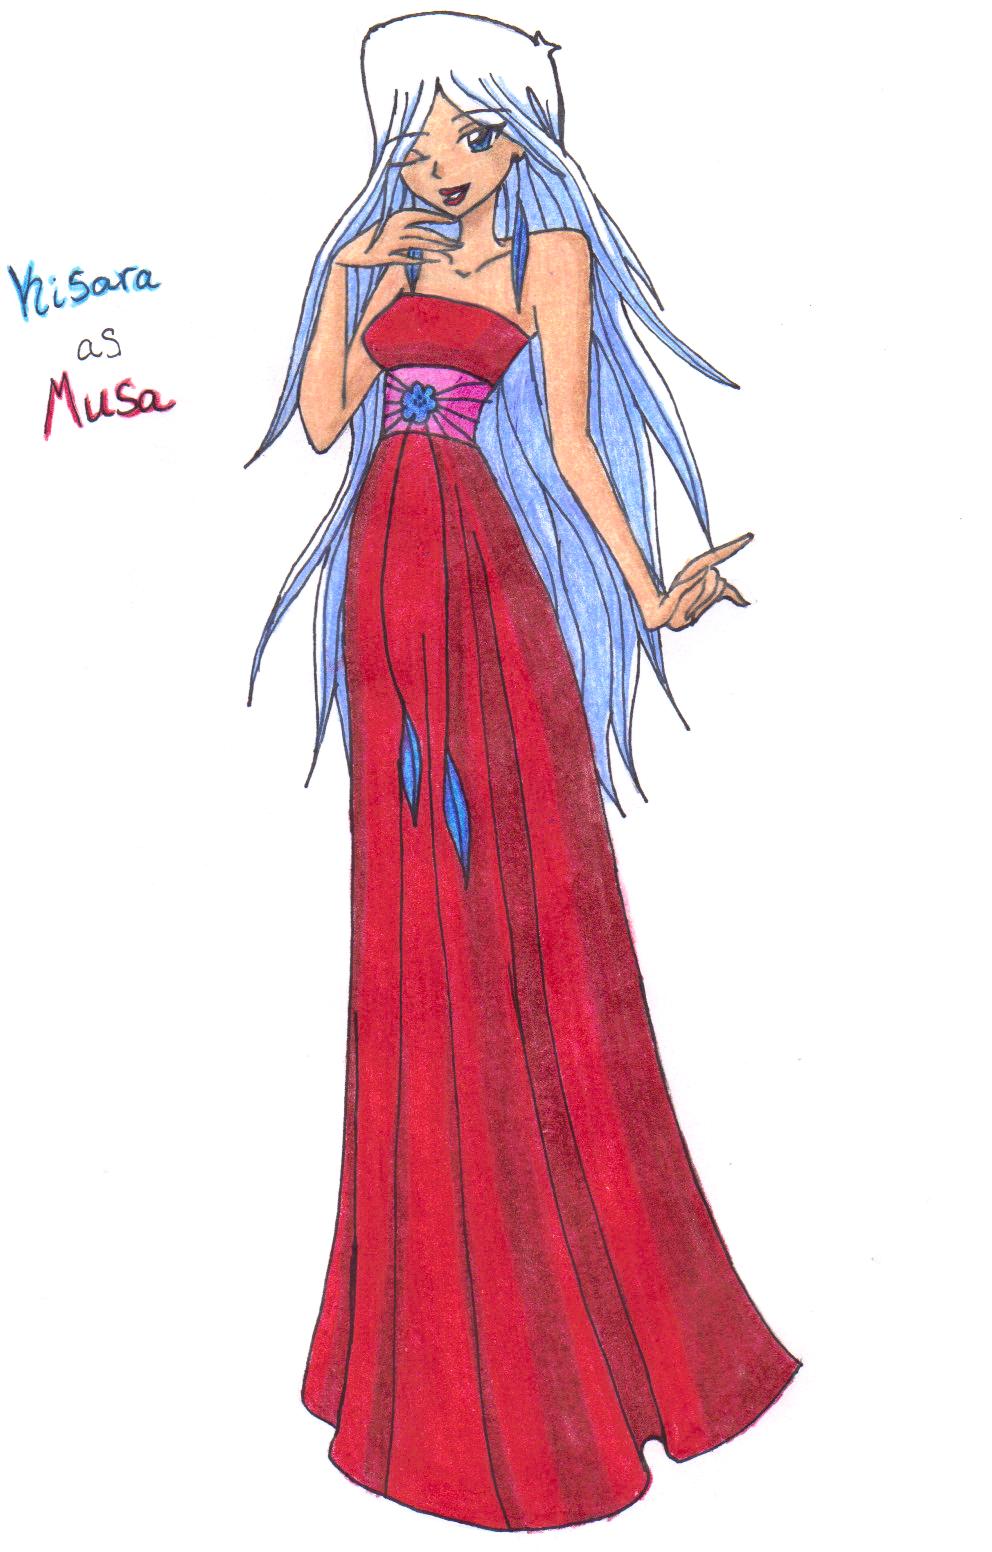 Kisara as Musa by setoXyamiKaiba4ever